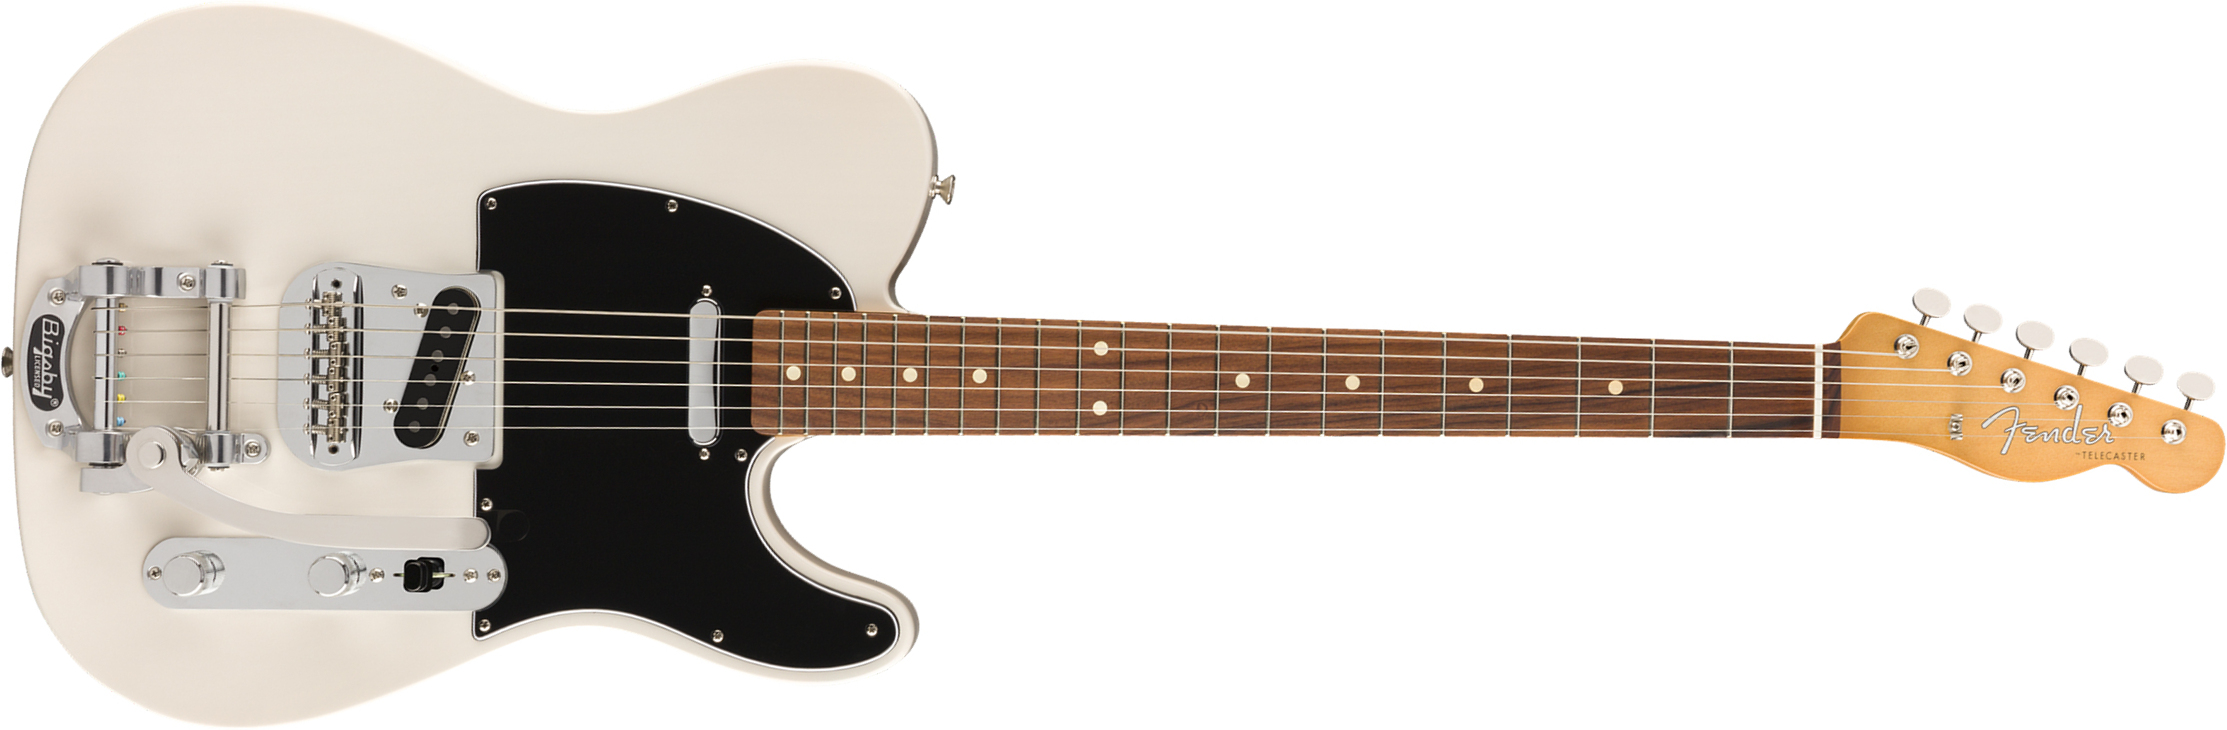 Fender Tele 60s Bigsby Vintera Vintage Mex Pf - White Blonde - Tel shape electric guitar - Main picture